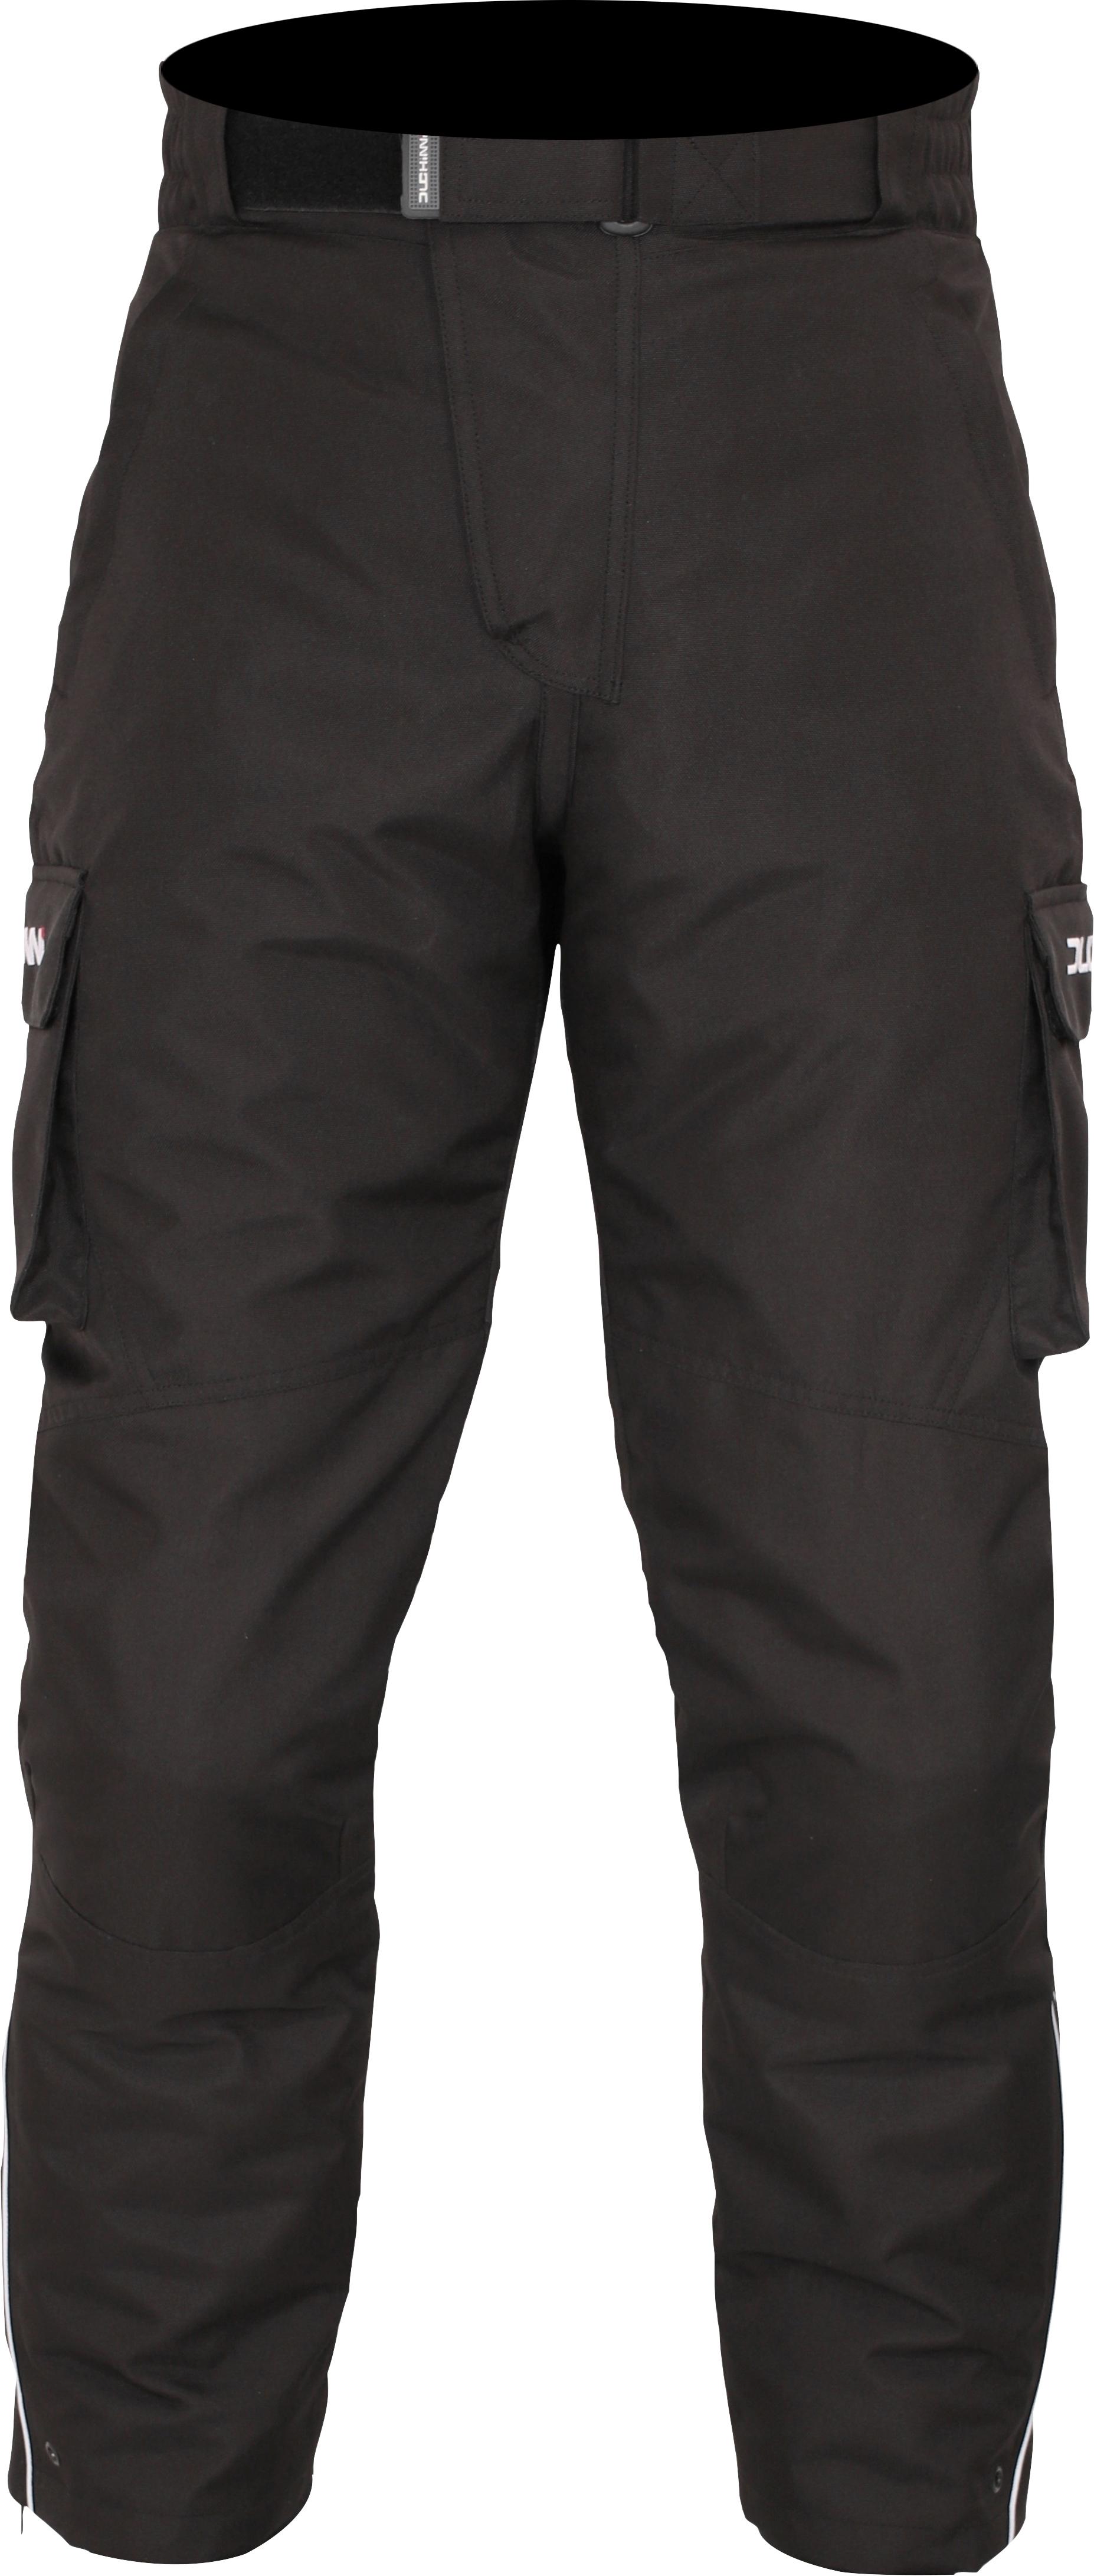 Duchinni Pacific Motorcycle Short Jeans - Black, 4Xl